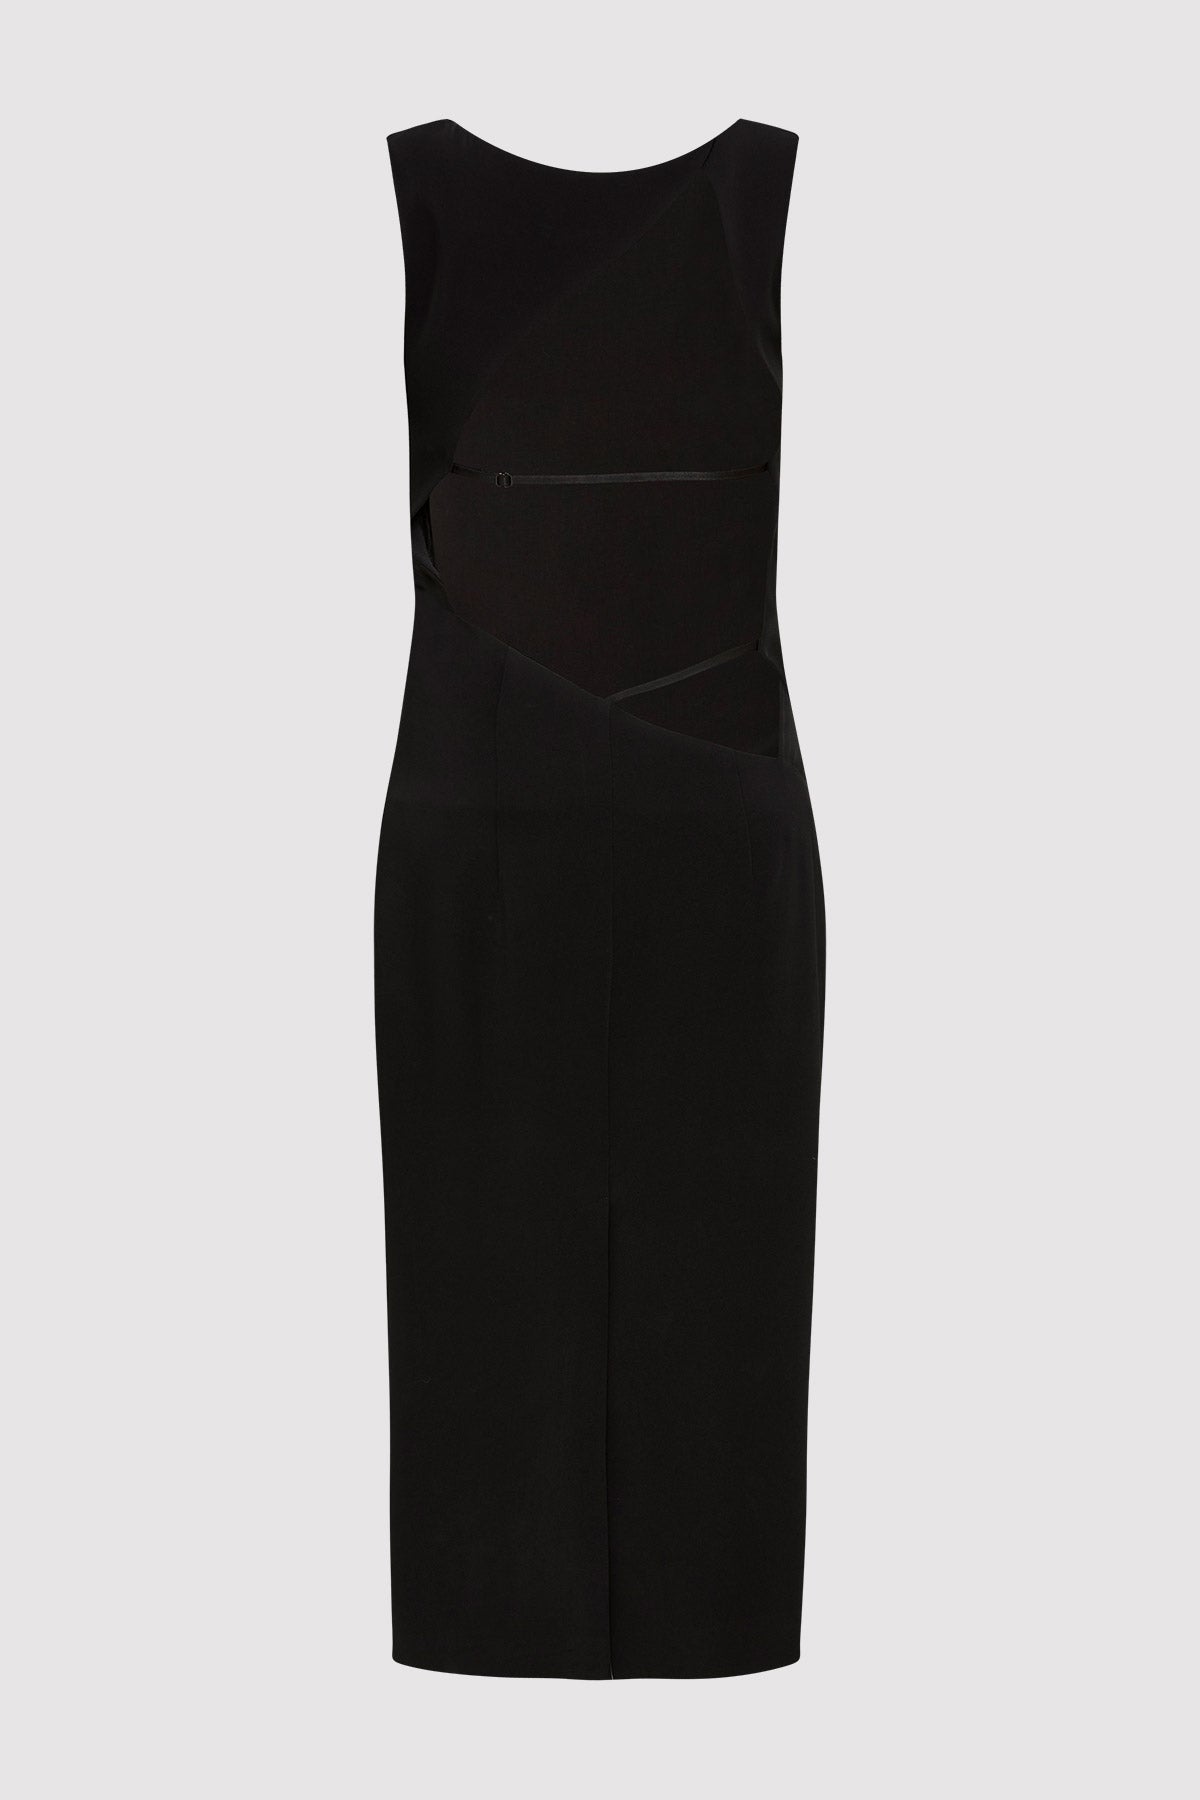 St. Agni | Cut Out Midi Dress - Black